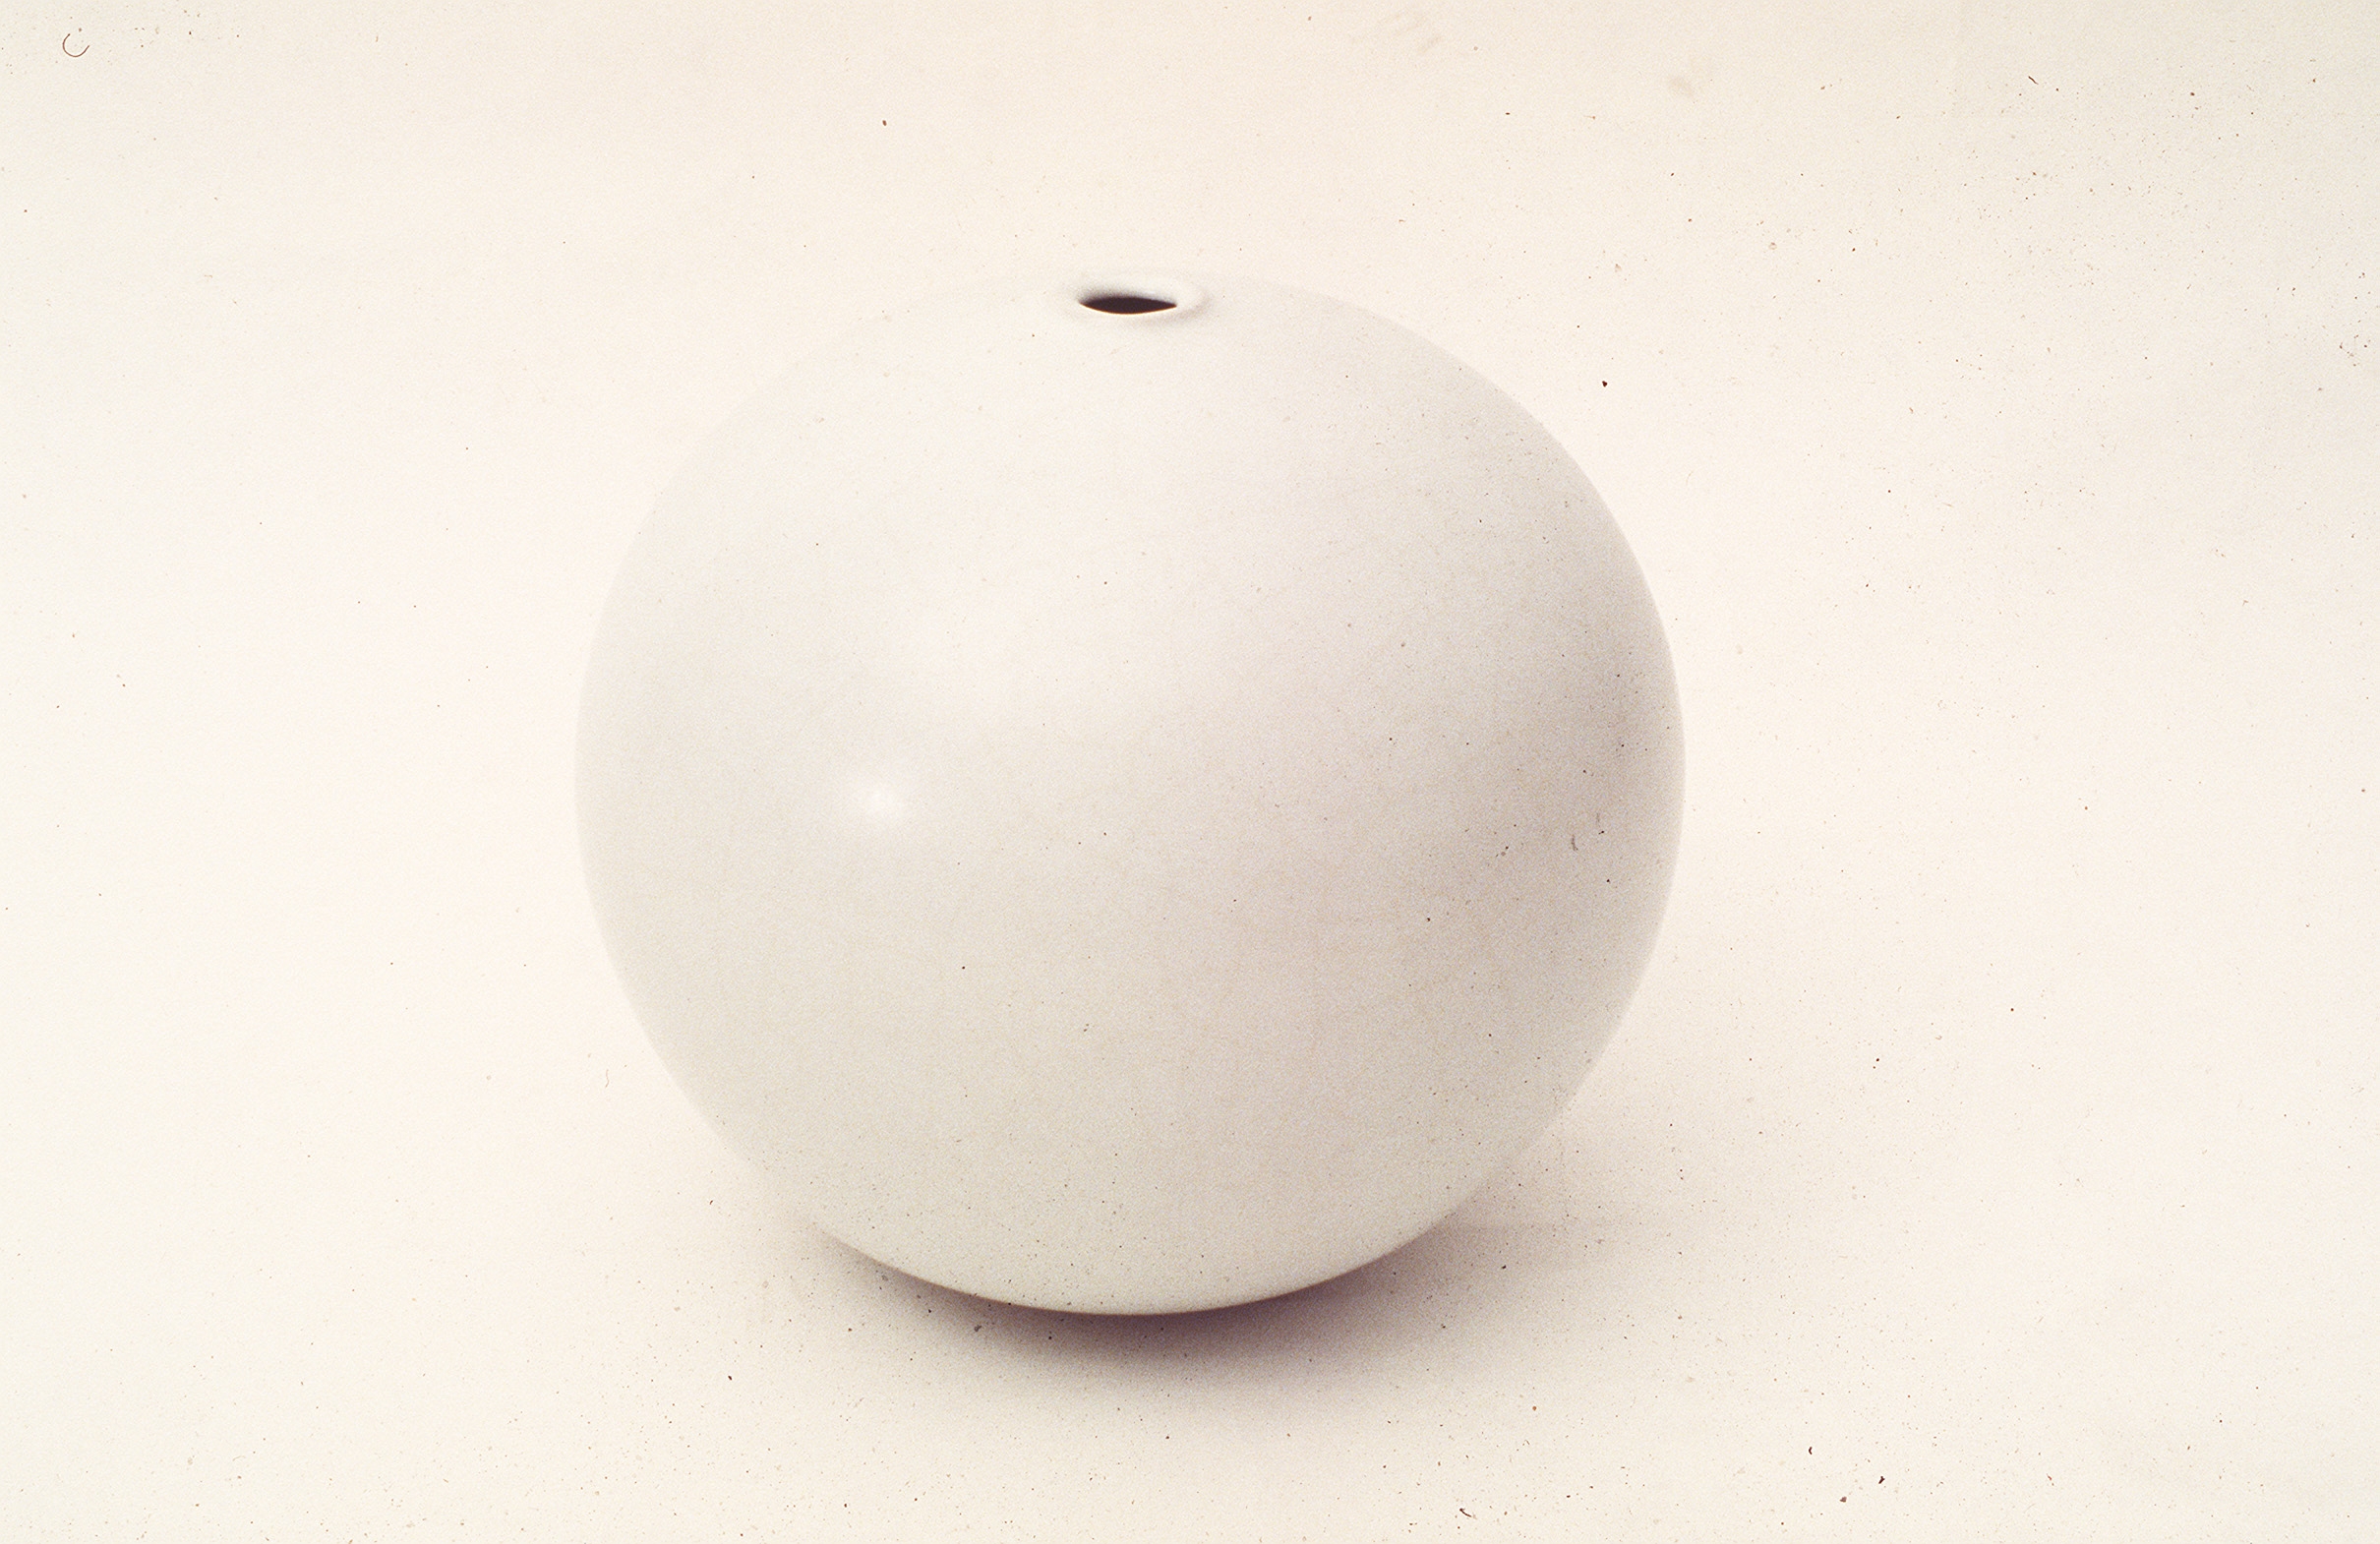 'Sphere' made by Shiga Shigeo